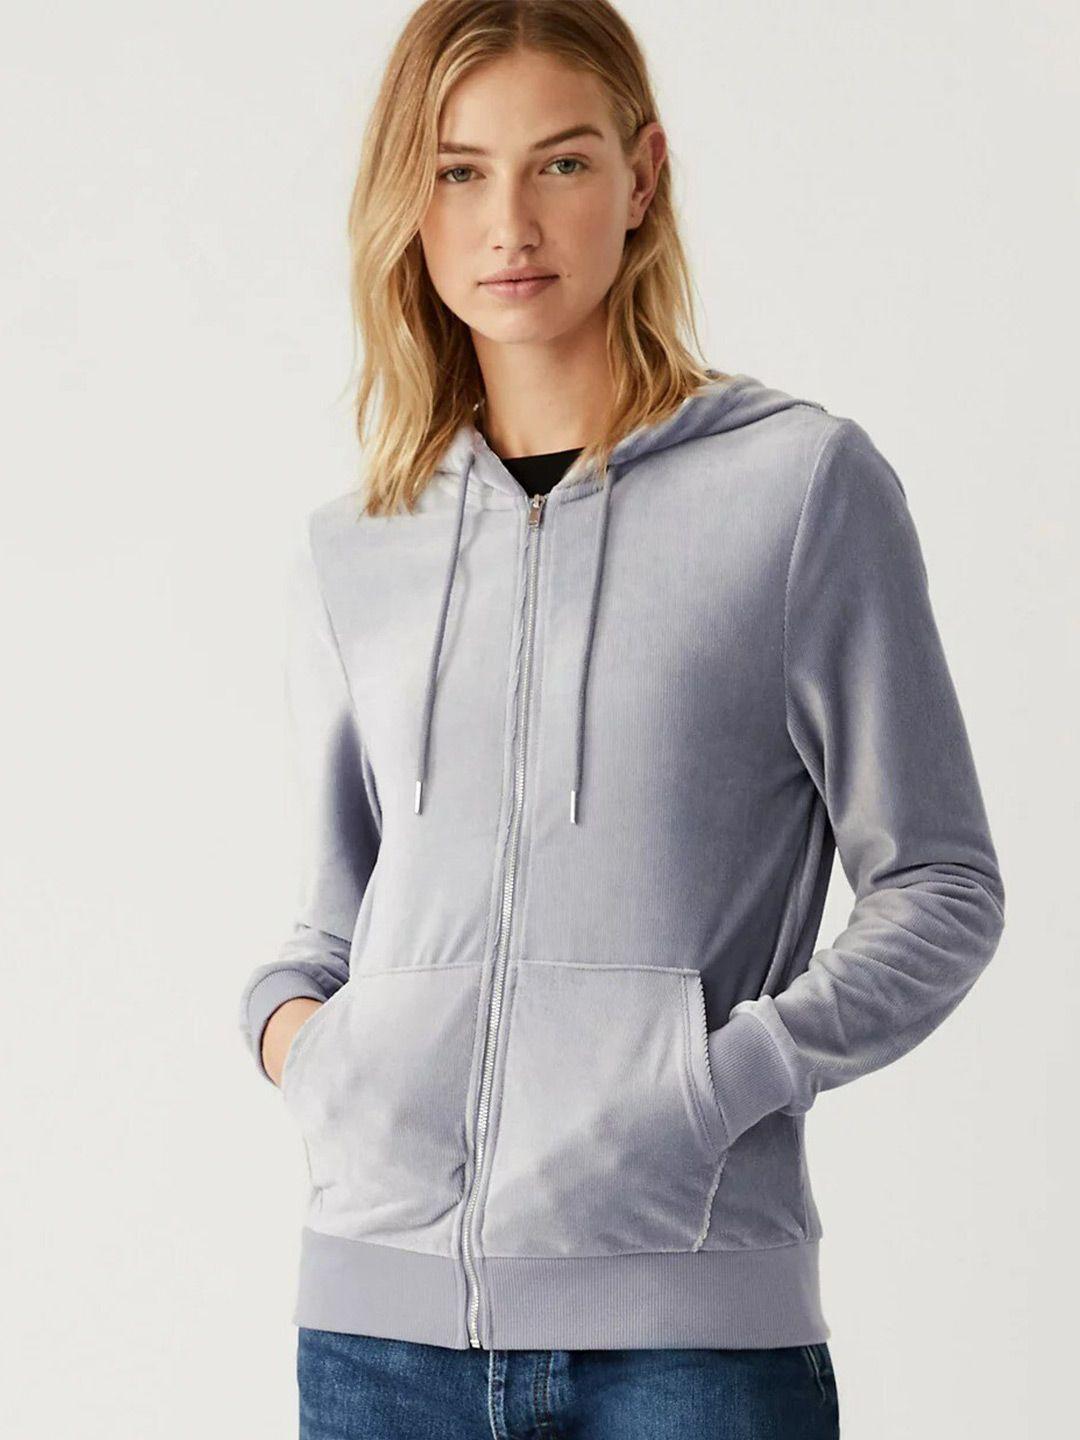 marks & spencer women grey sweatshirt